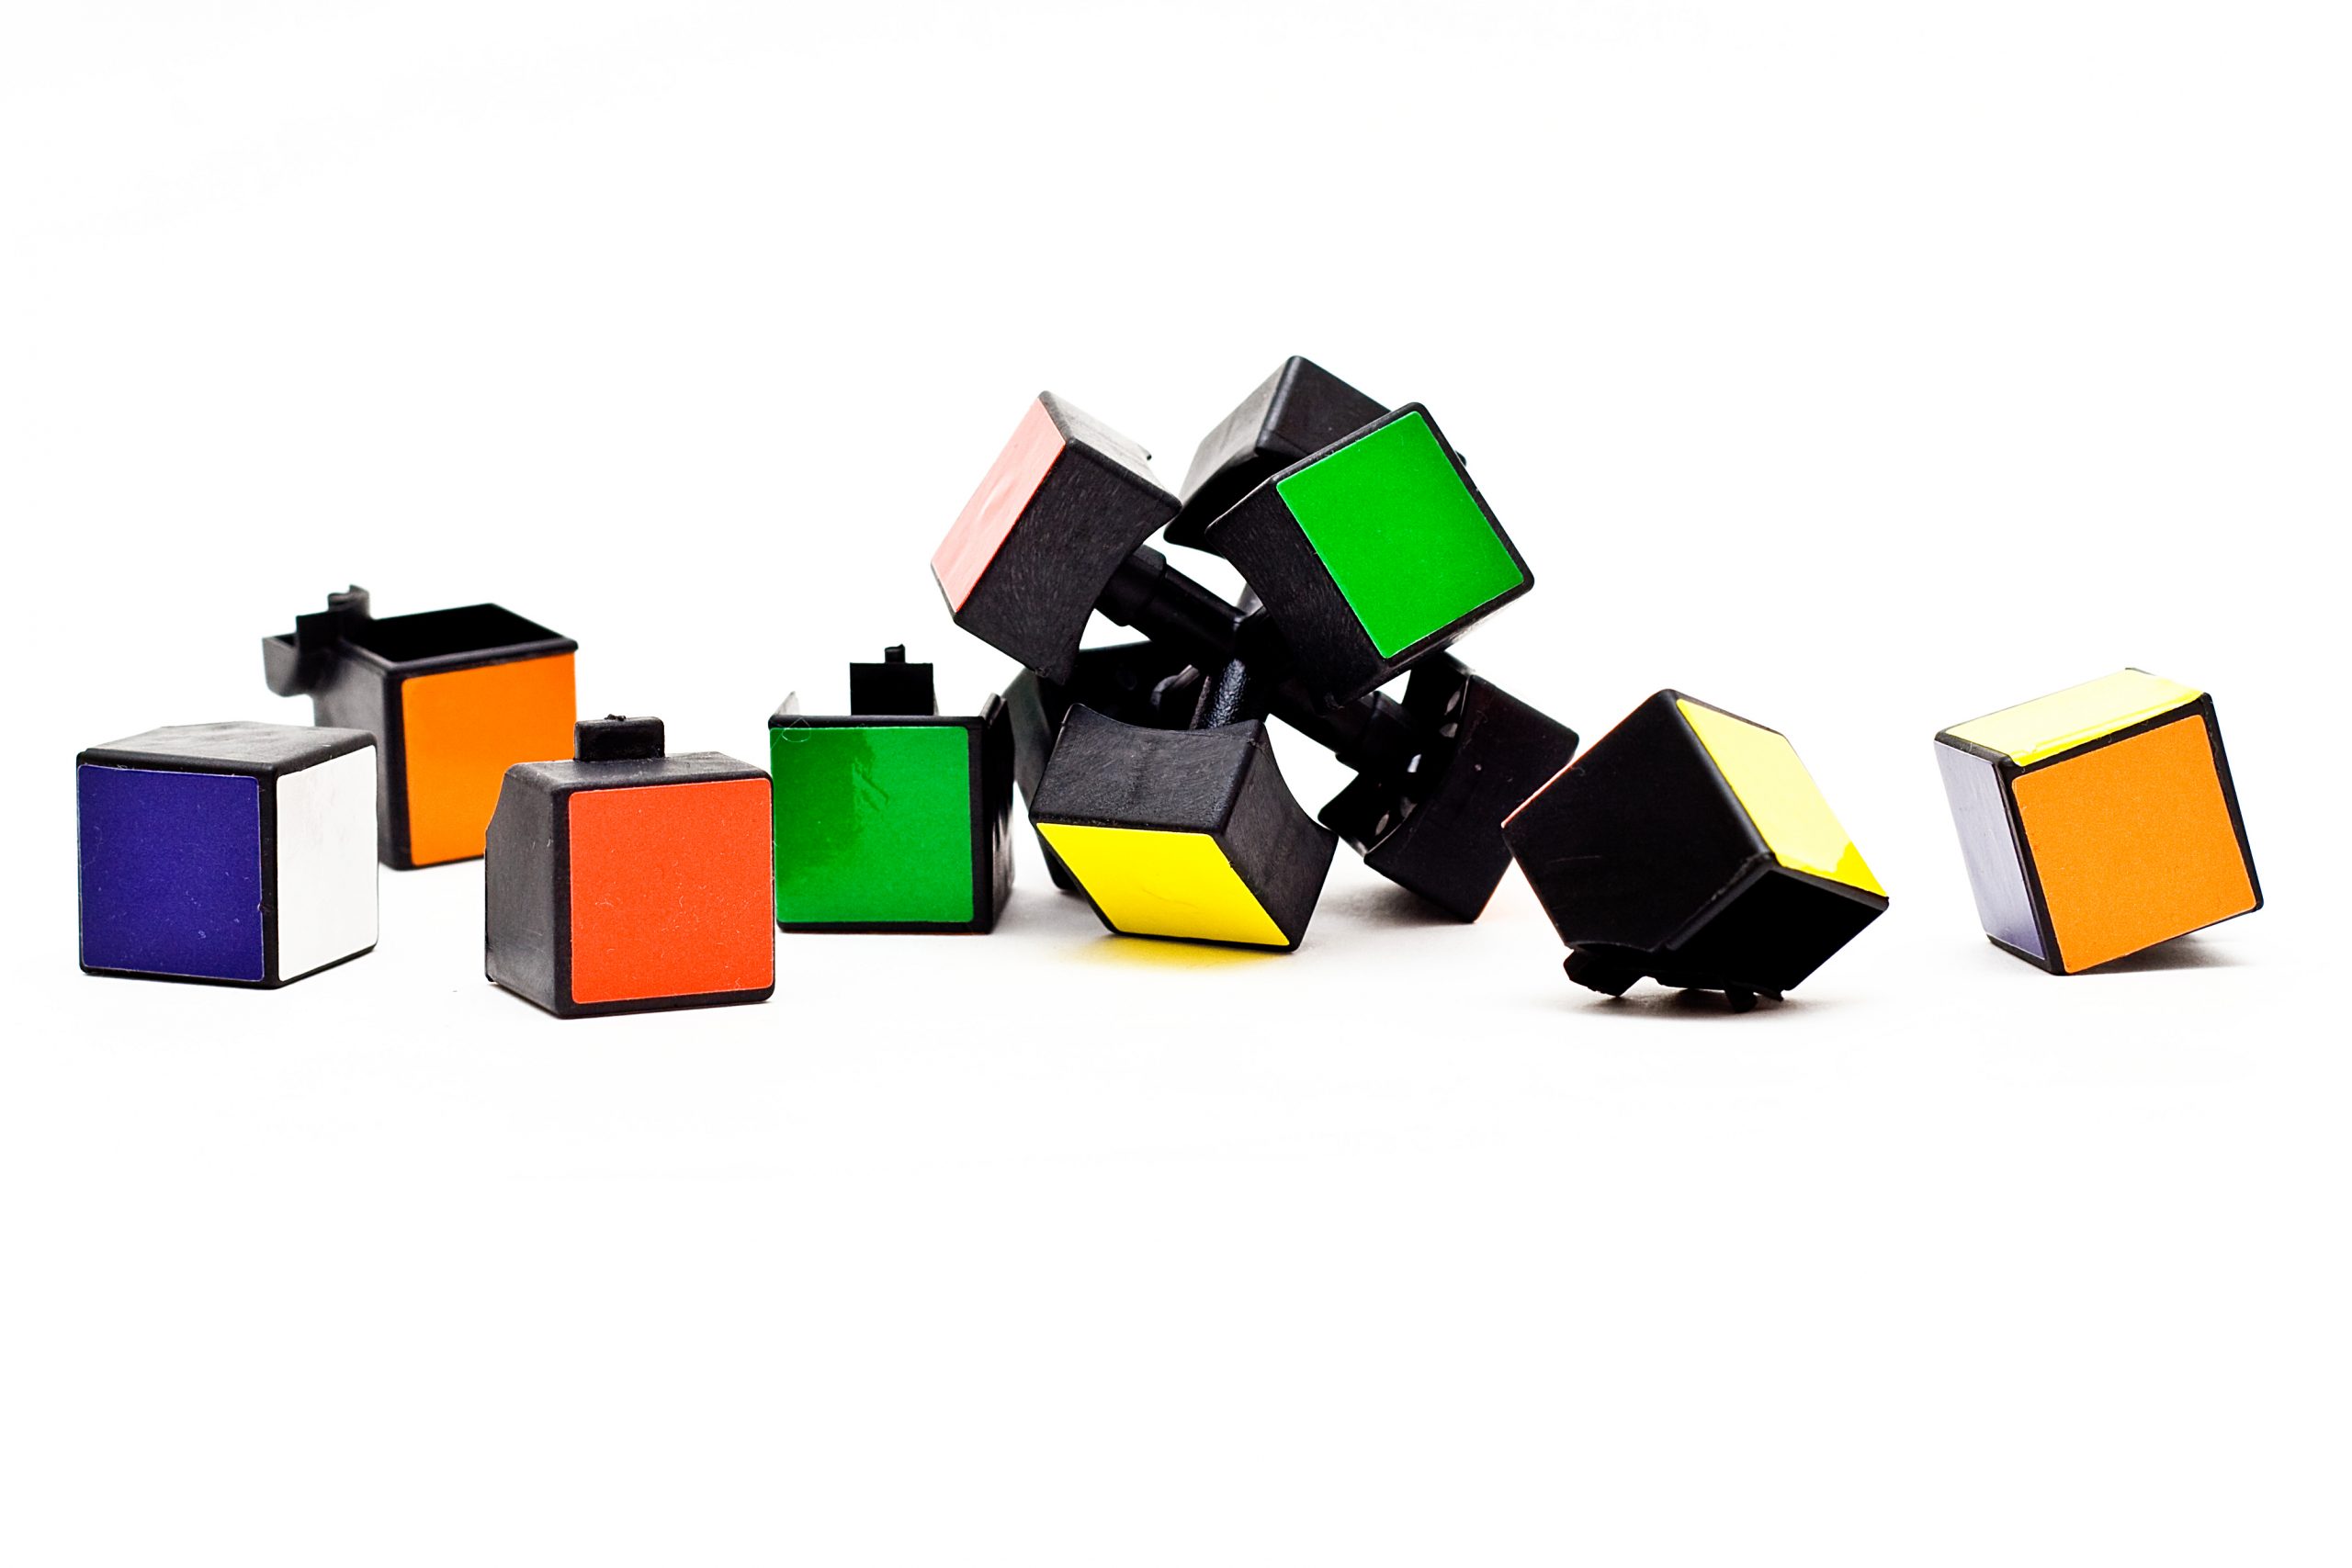 Rubiks Cube Solution By Patrizio Cuscito Via Flickr Cc By 2.0